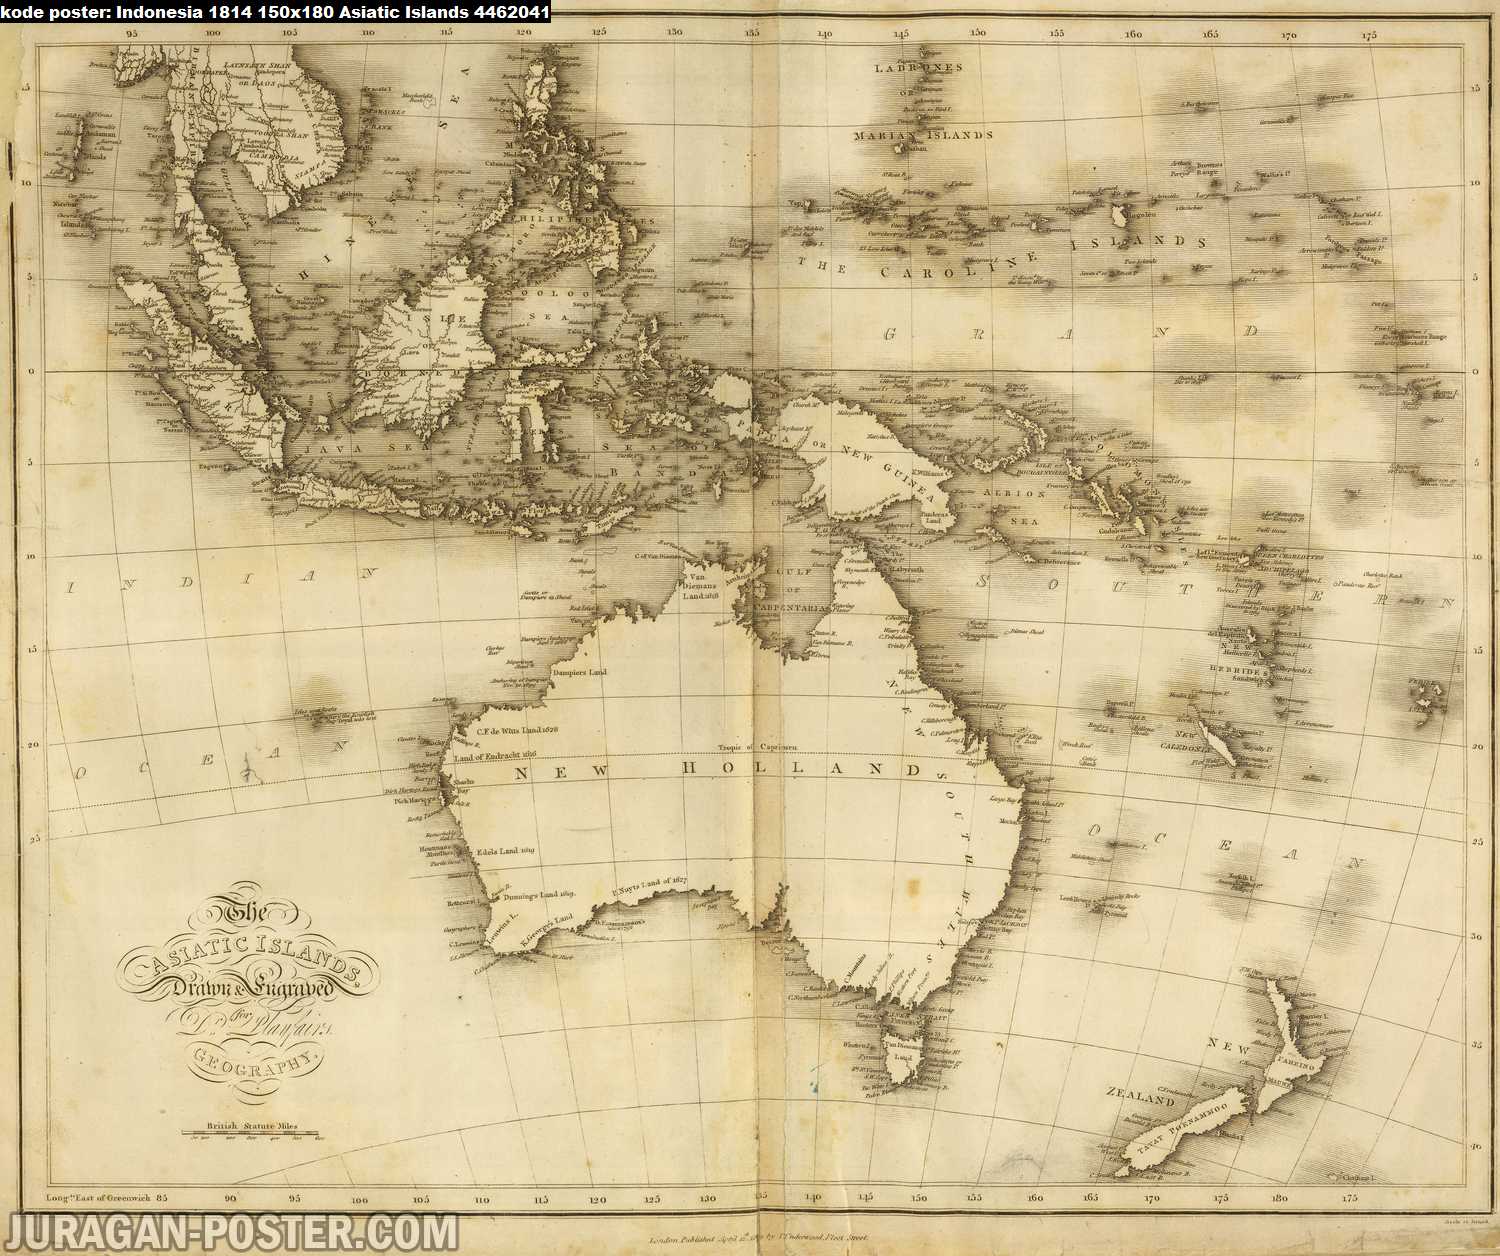 peta indonesia kuno tahun 1814